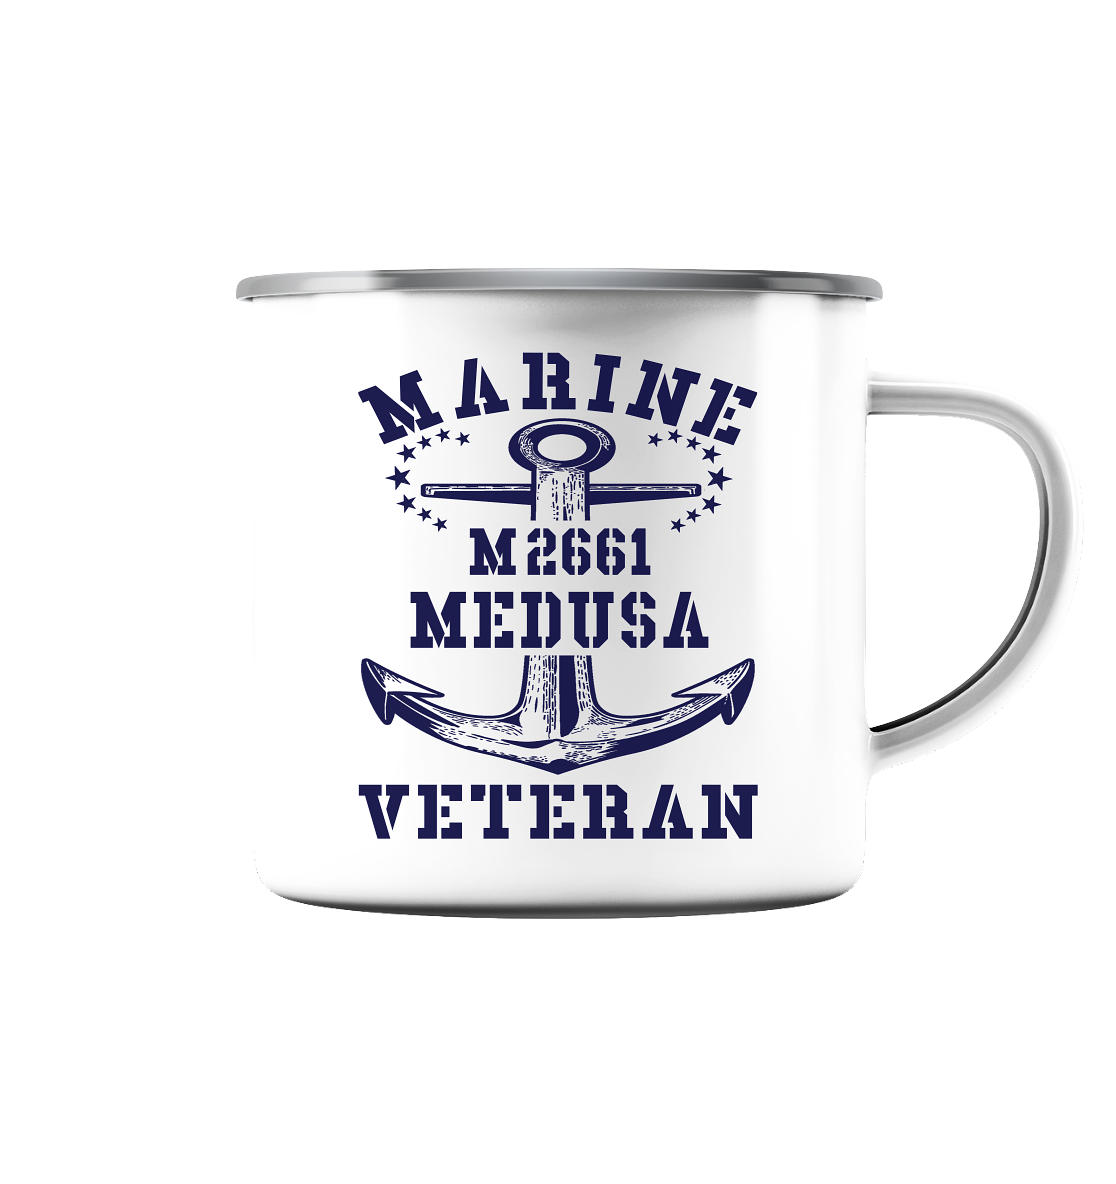 BiMi M2661 MEDUSA Marine Veteran - Emaille Tasse (Silber)